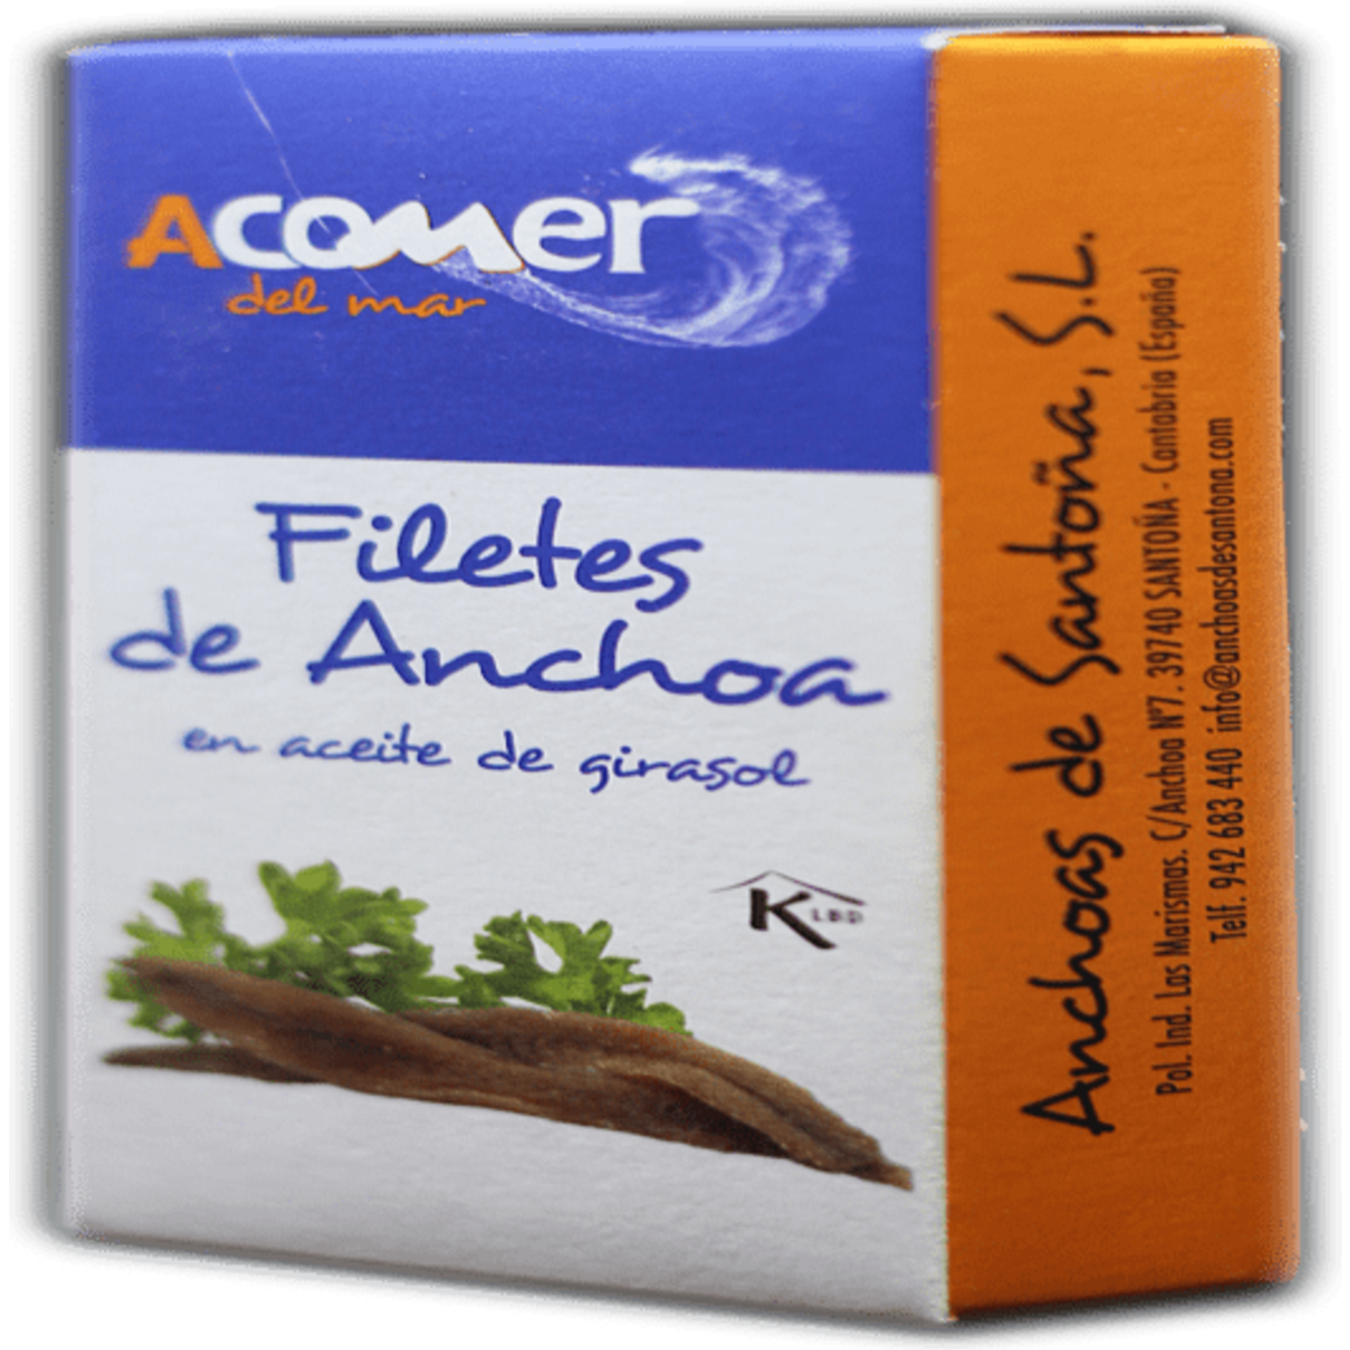 Анчоусы Acomer del Mar в подсолнечном масле 45г